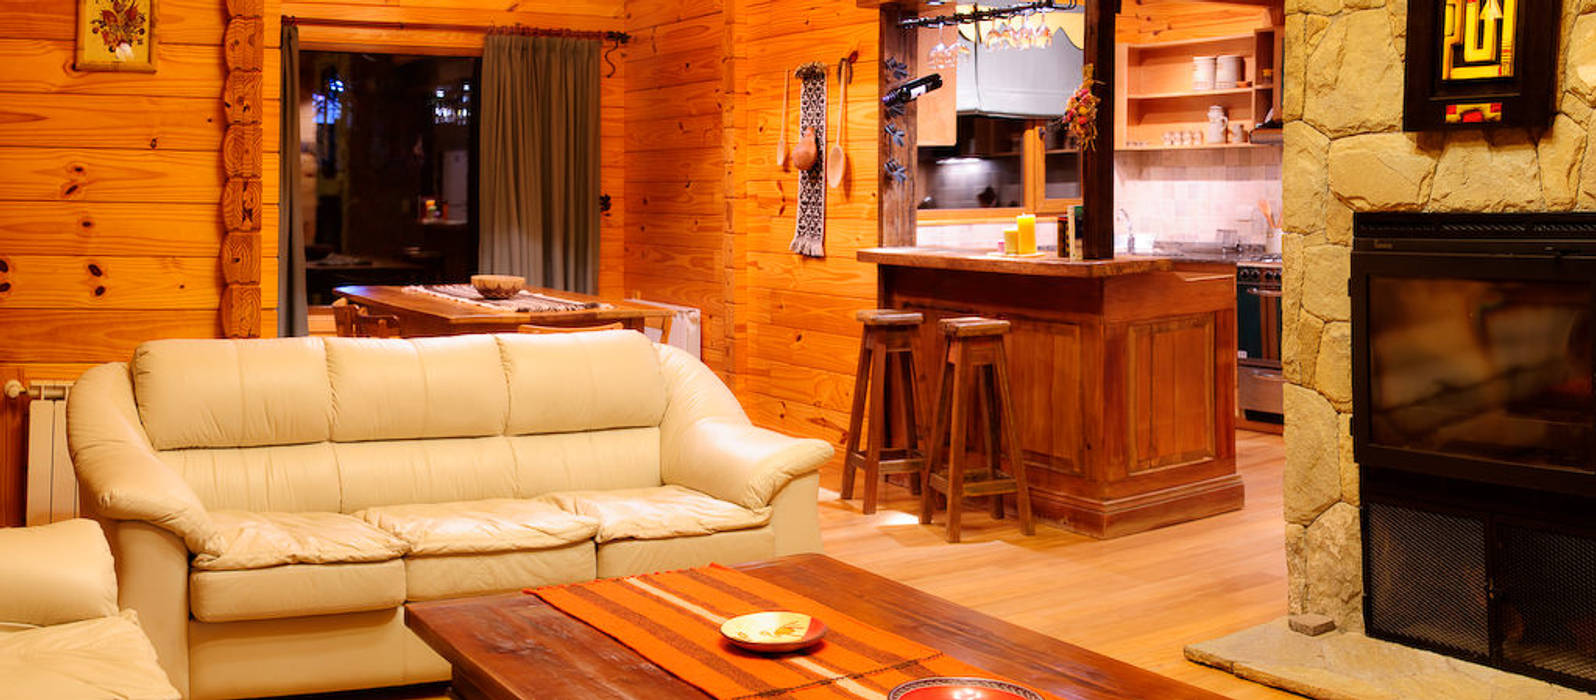 Casa Amancay Ι San Martín de los Andes, Neuquén. Argentina., Patagonia Log Homes - Arquitectos - Neuquén Patagonia Log Homes - Arquitectos - Neuquén Living room Wood Wood effect